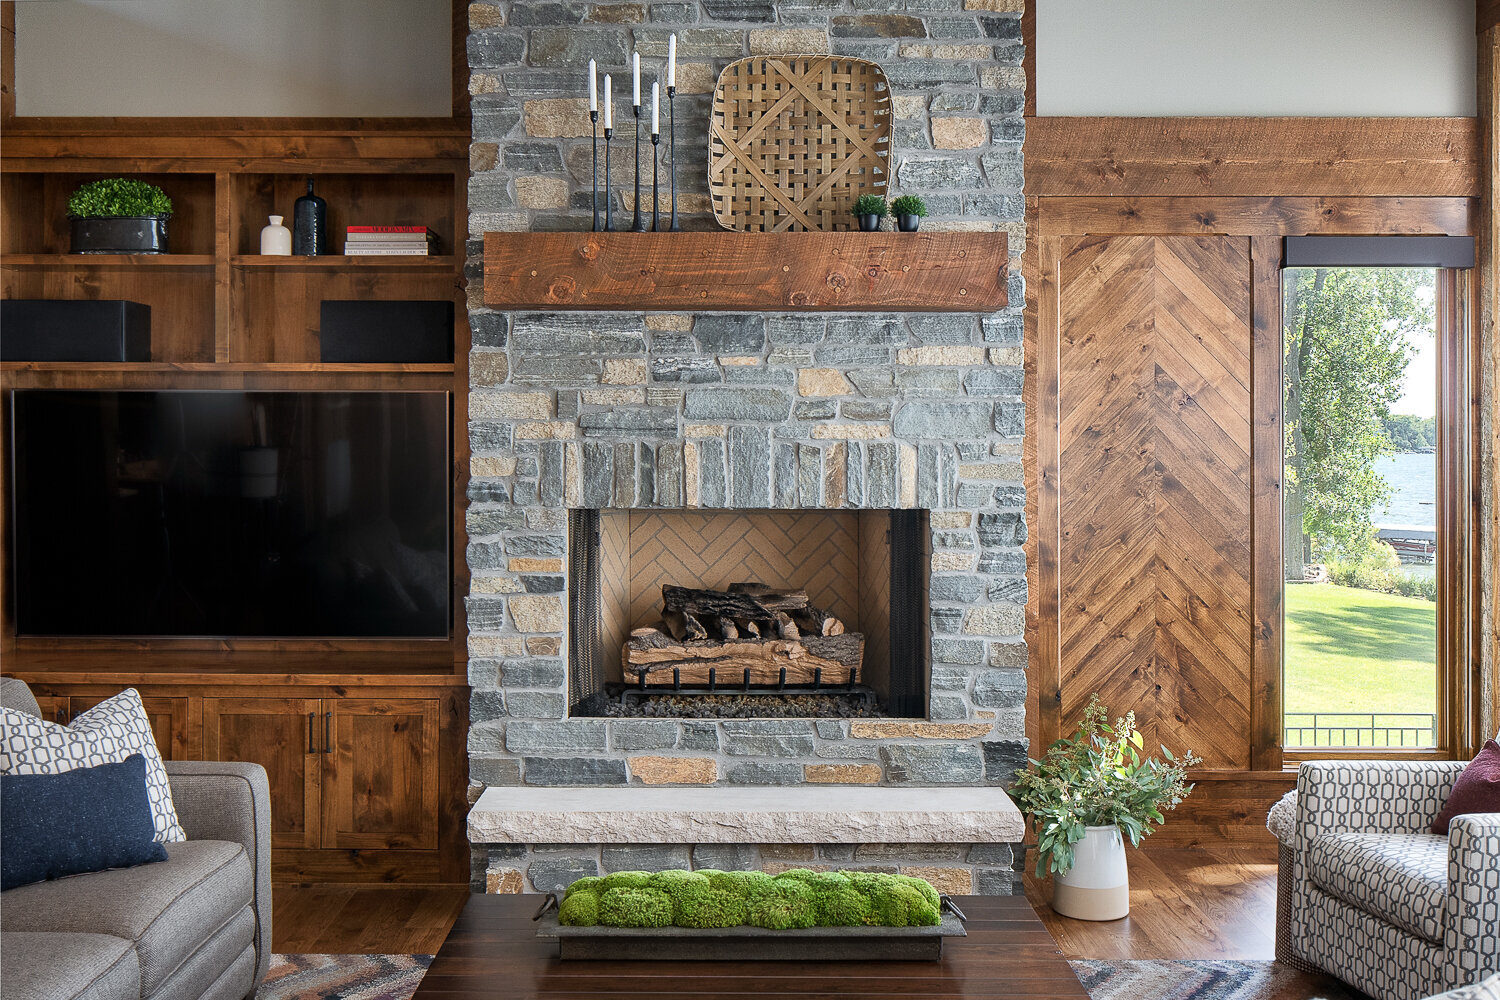 Beautiful stone fireplace with herringbone patterns